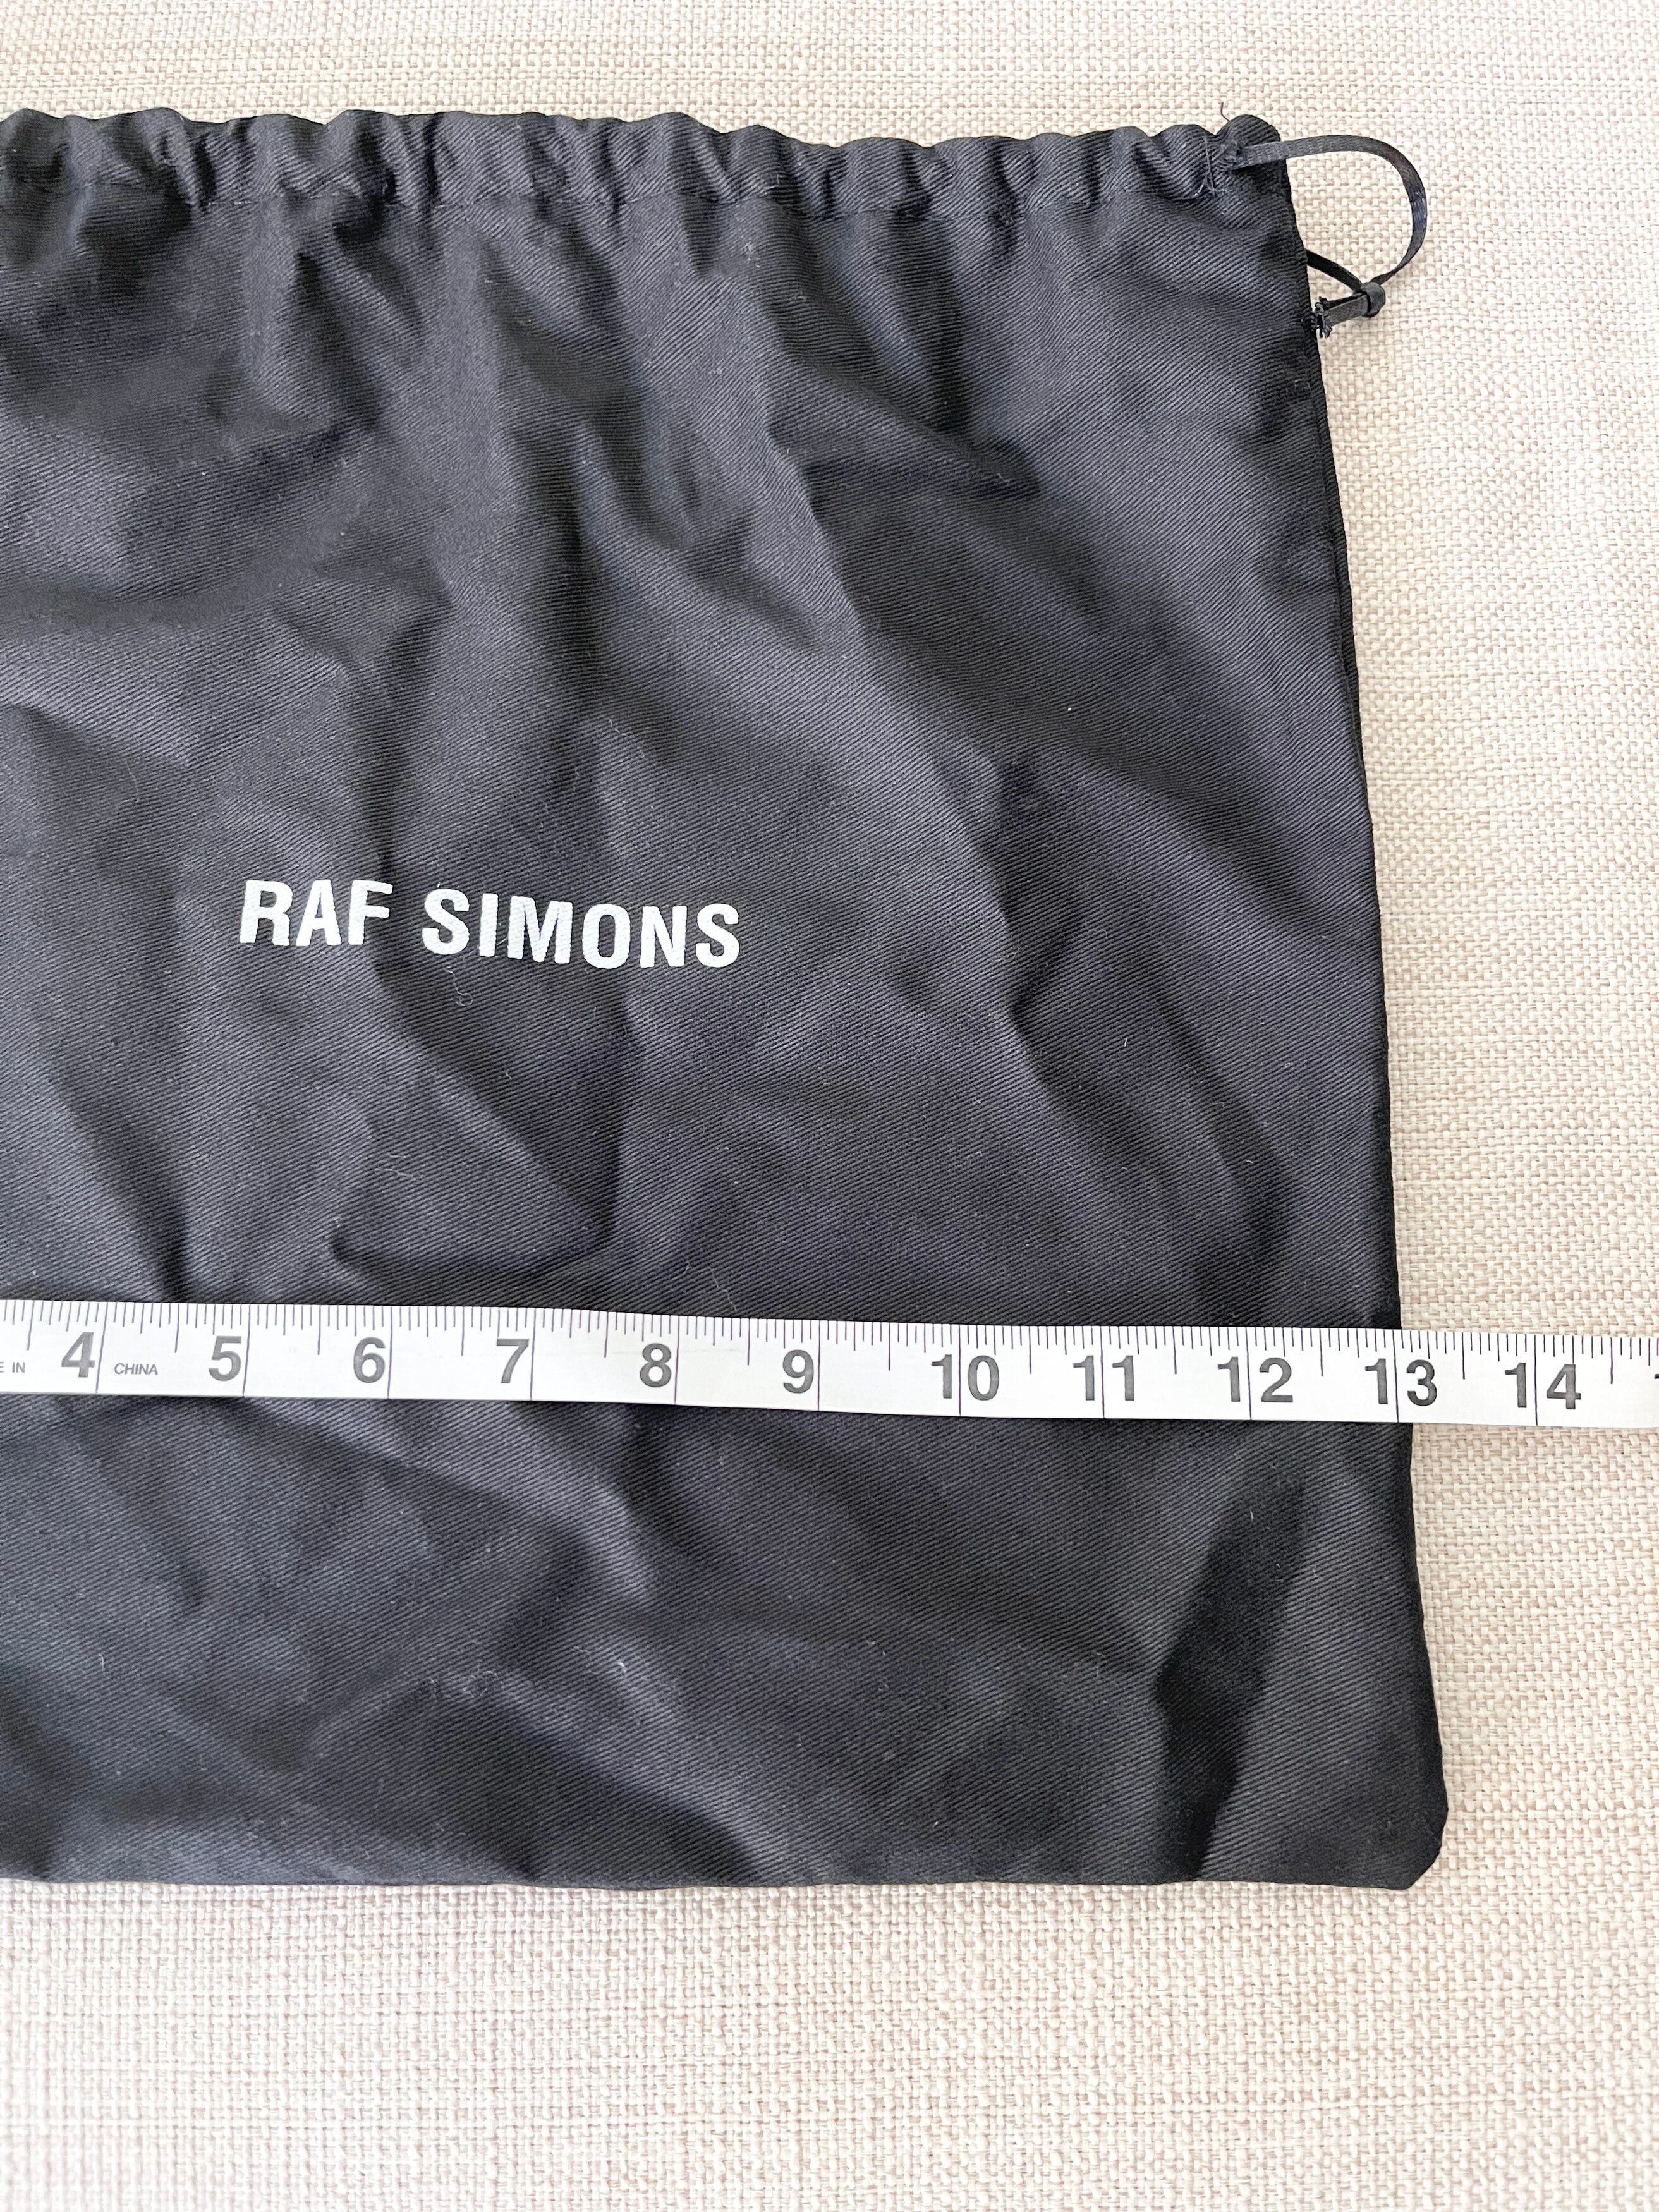 STEAL! Raf Simons Dust Bag (brand new) - 4